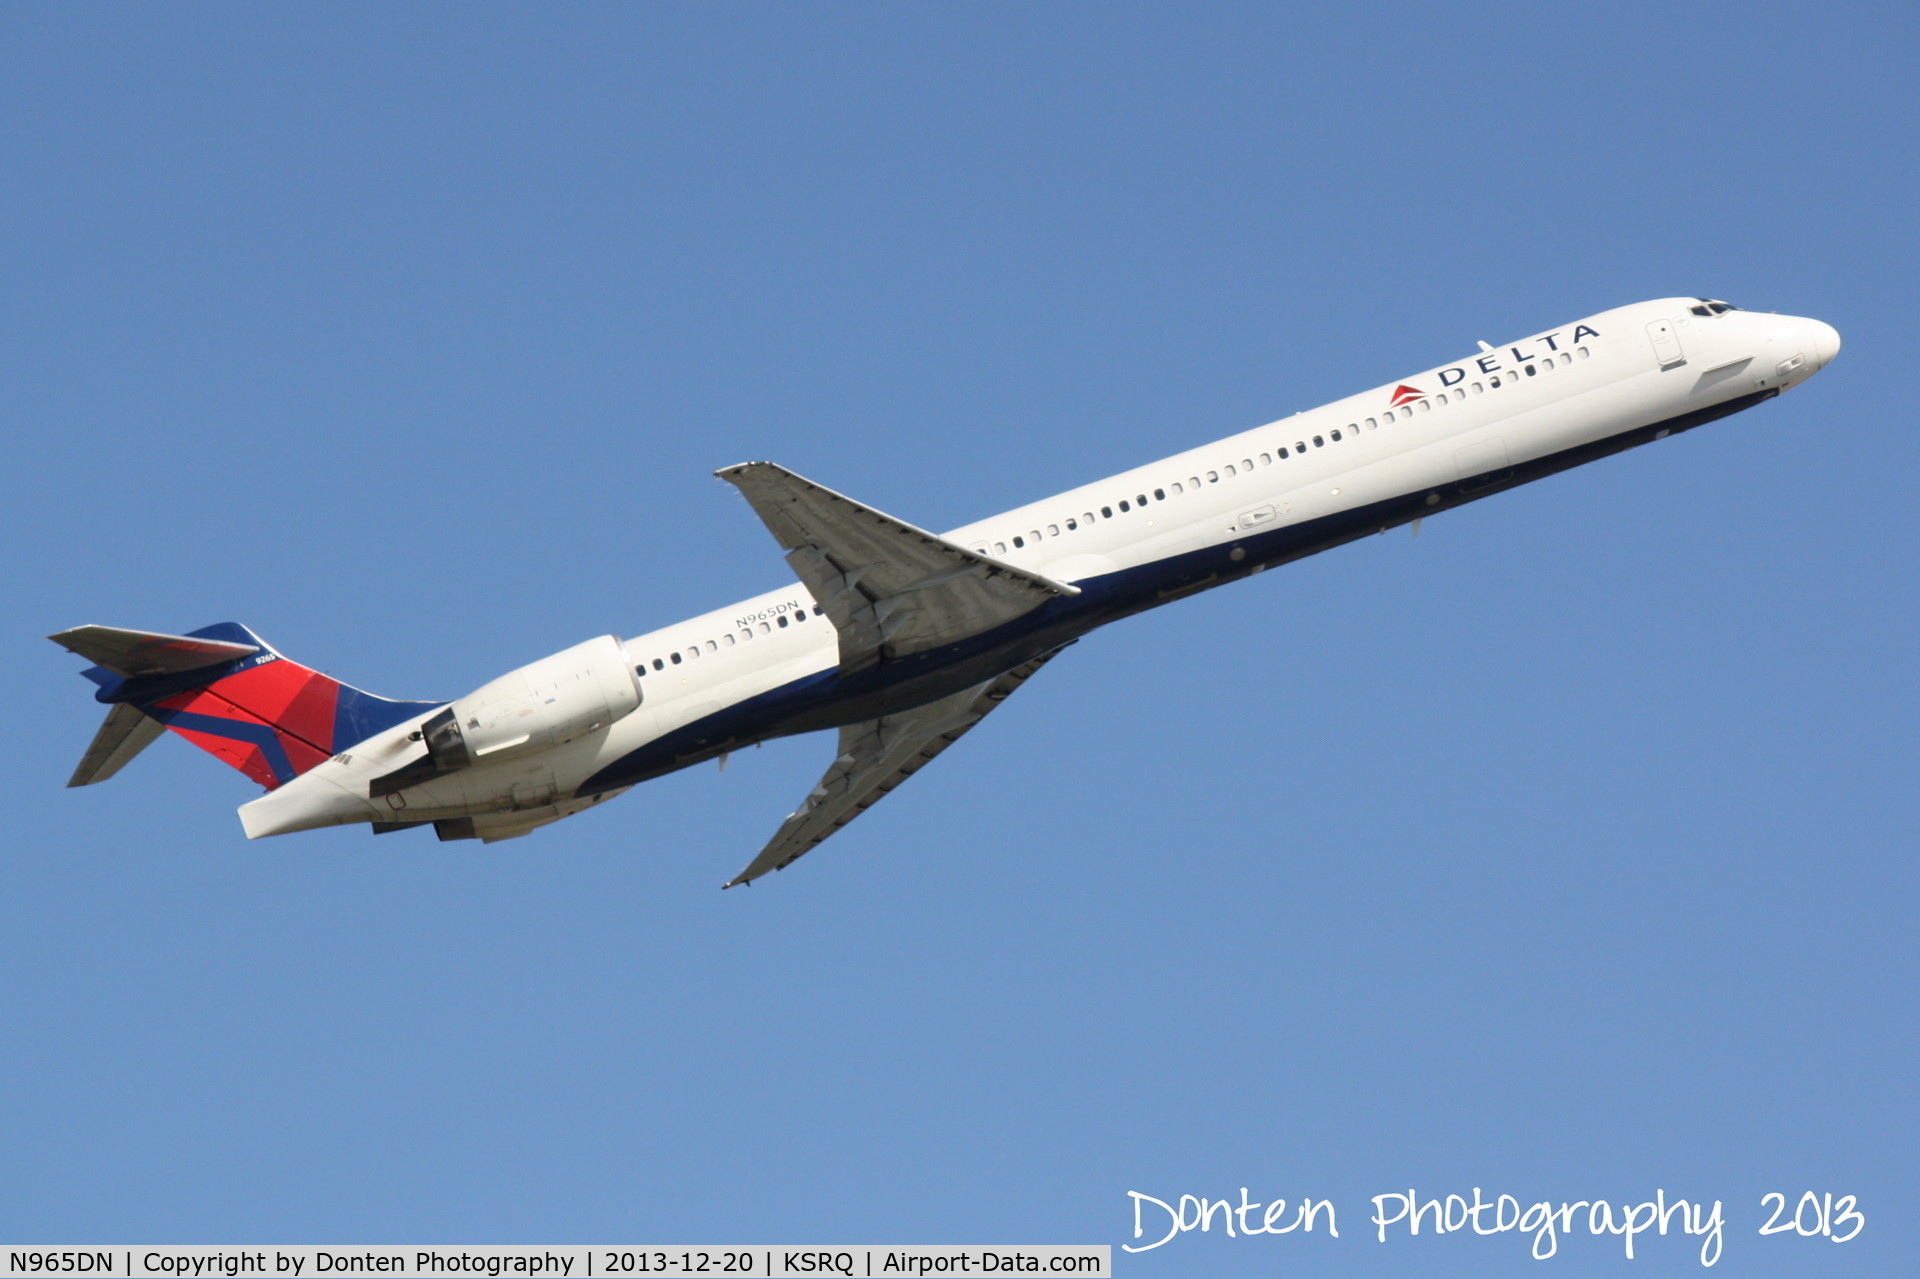 N965DN, 2001 McDonnell Douglas MD-90-30 C/N 60002, Delta Flight 2298 (N965DN) departs Sarasota-Bradenton International Airport enroute to Hartsfield-Jackson Atlanta International Airport